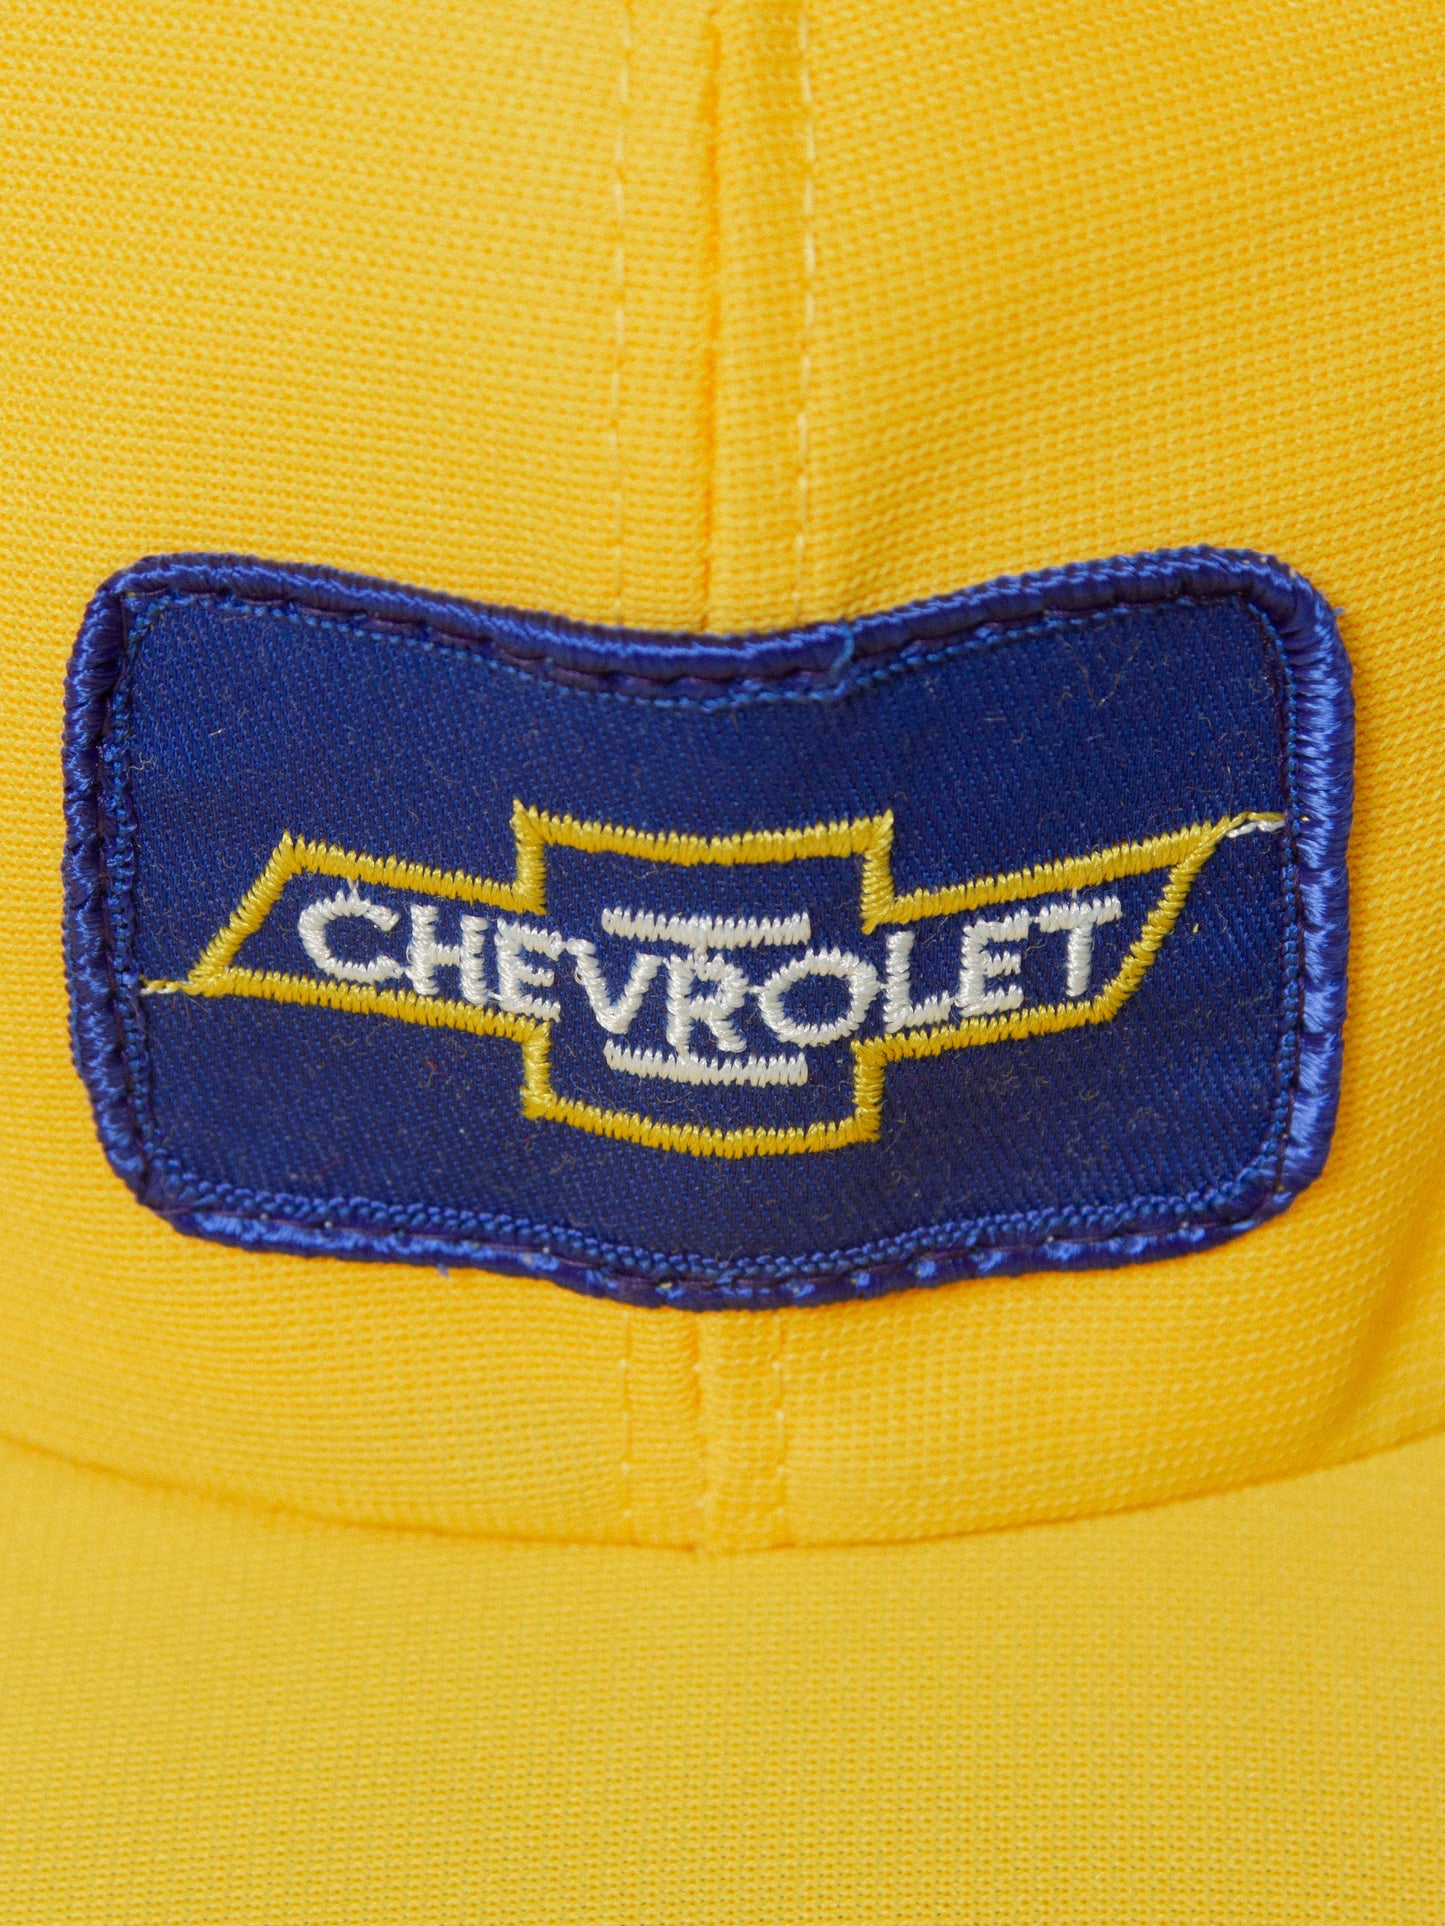 New Old Stock Chevrolet Trucker Cap (OS)